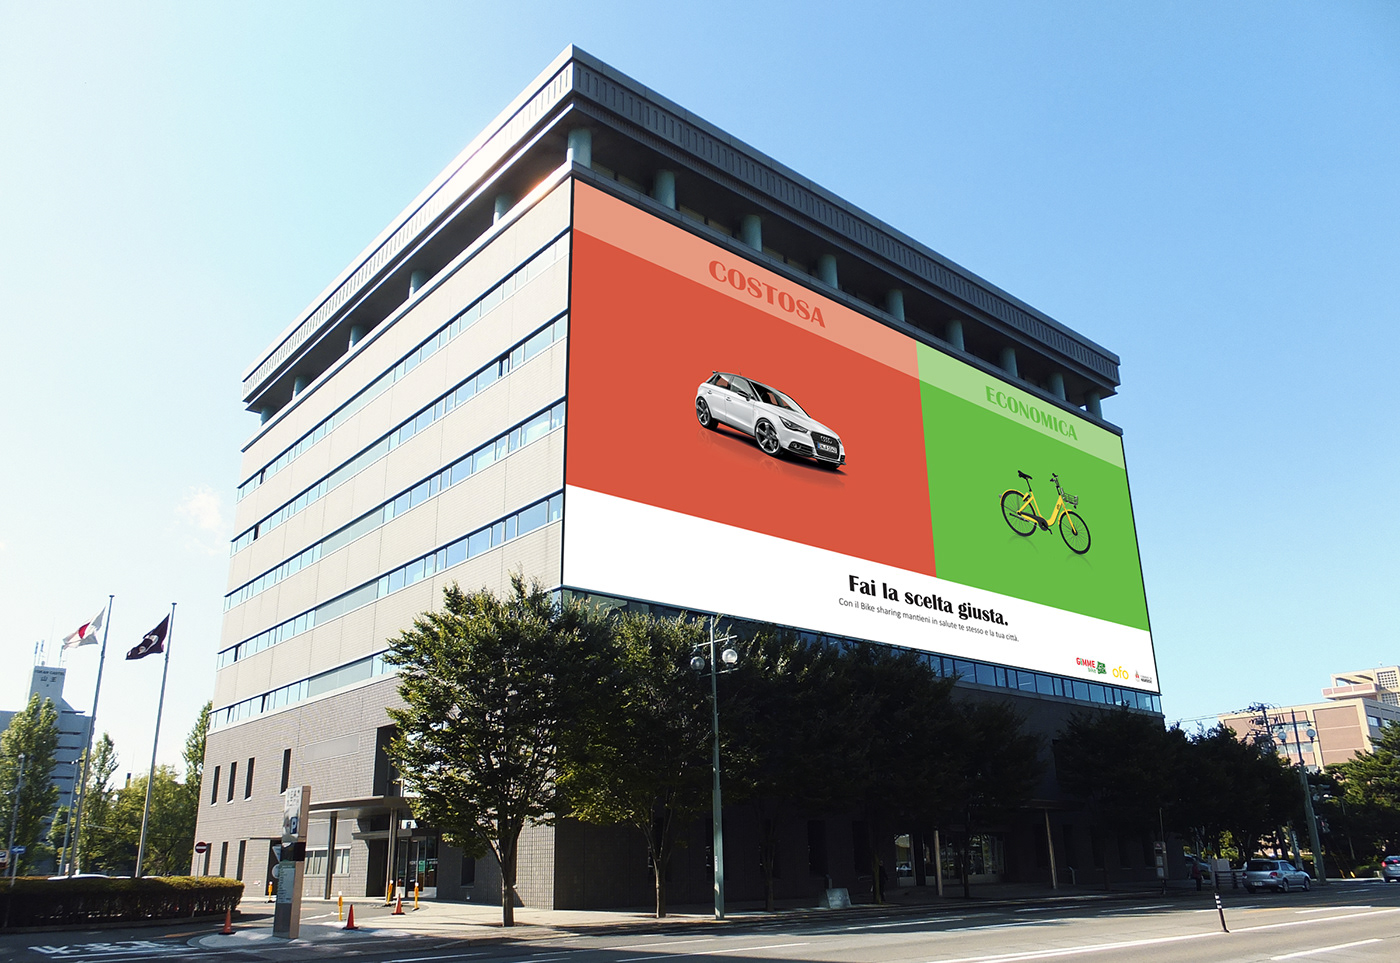 graphic billboard communication design Project bikesharing